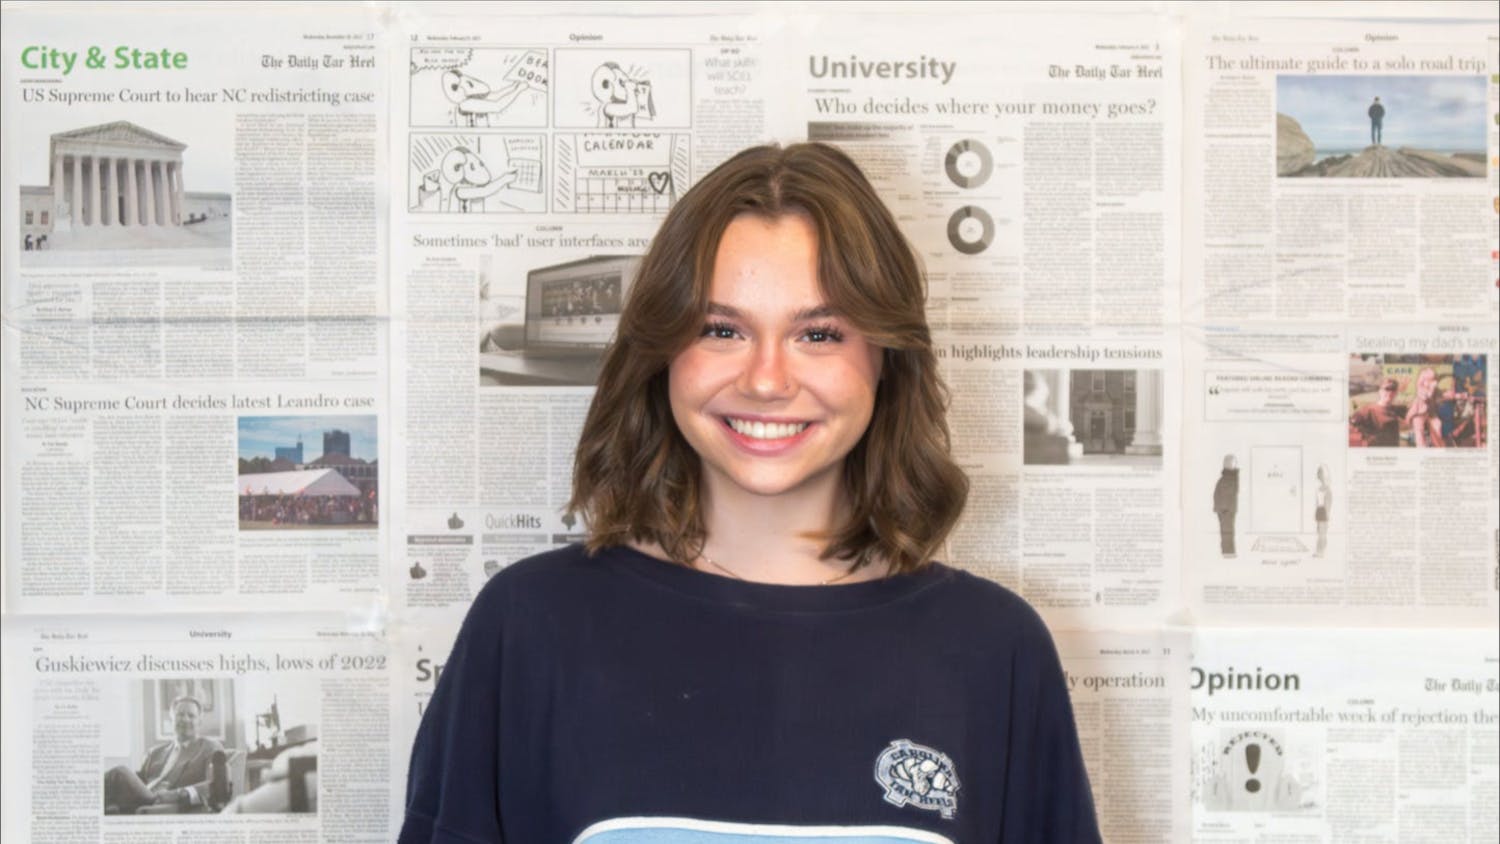 University Editor: Abby Pender